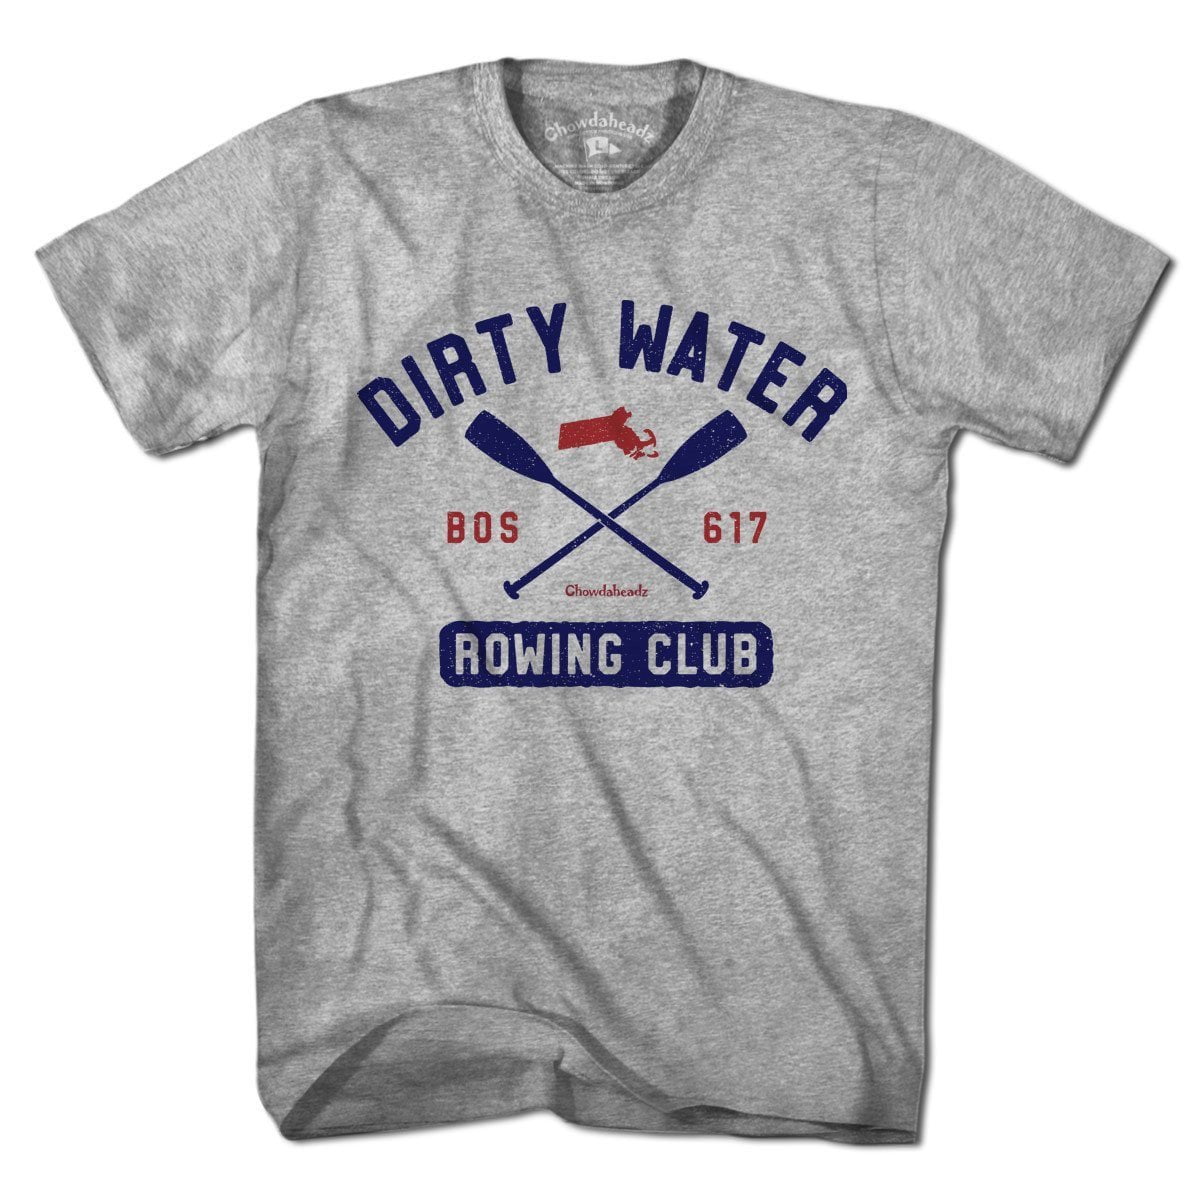 Dirty Water Rowing Club - Chowdaheadz